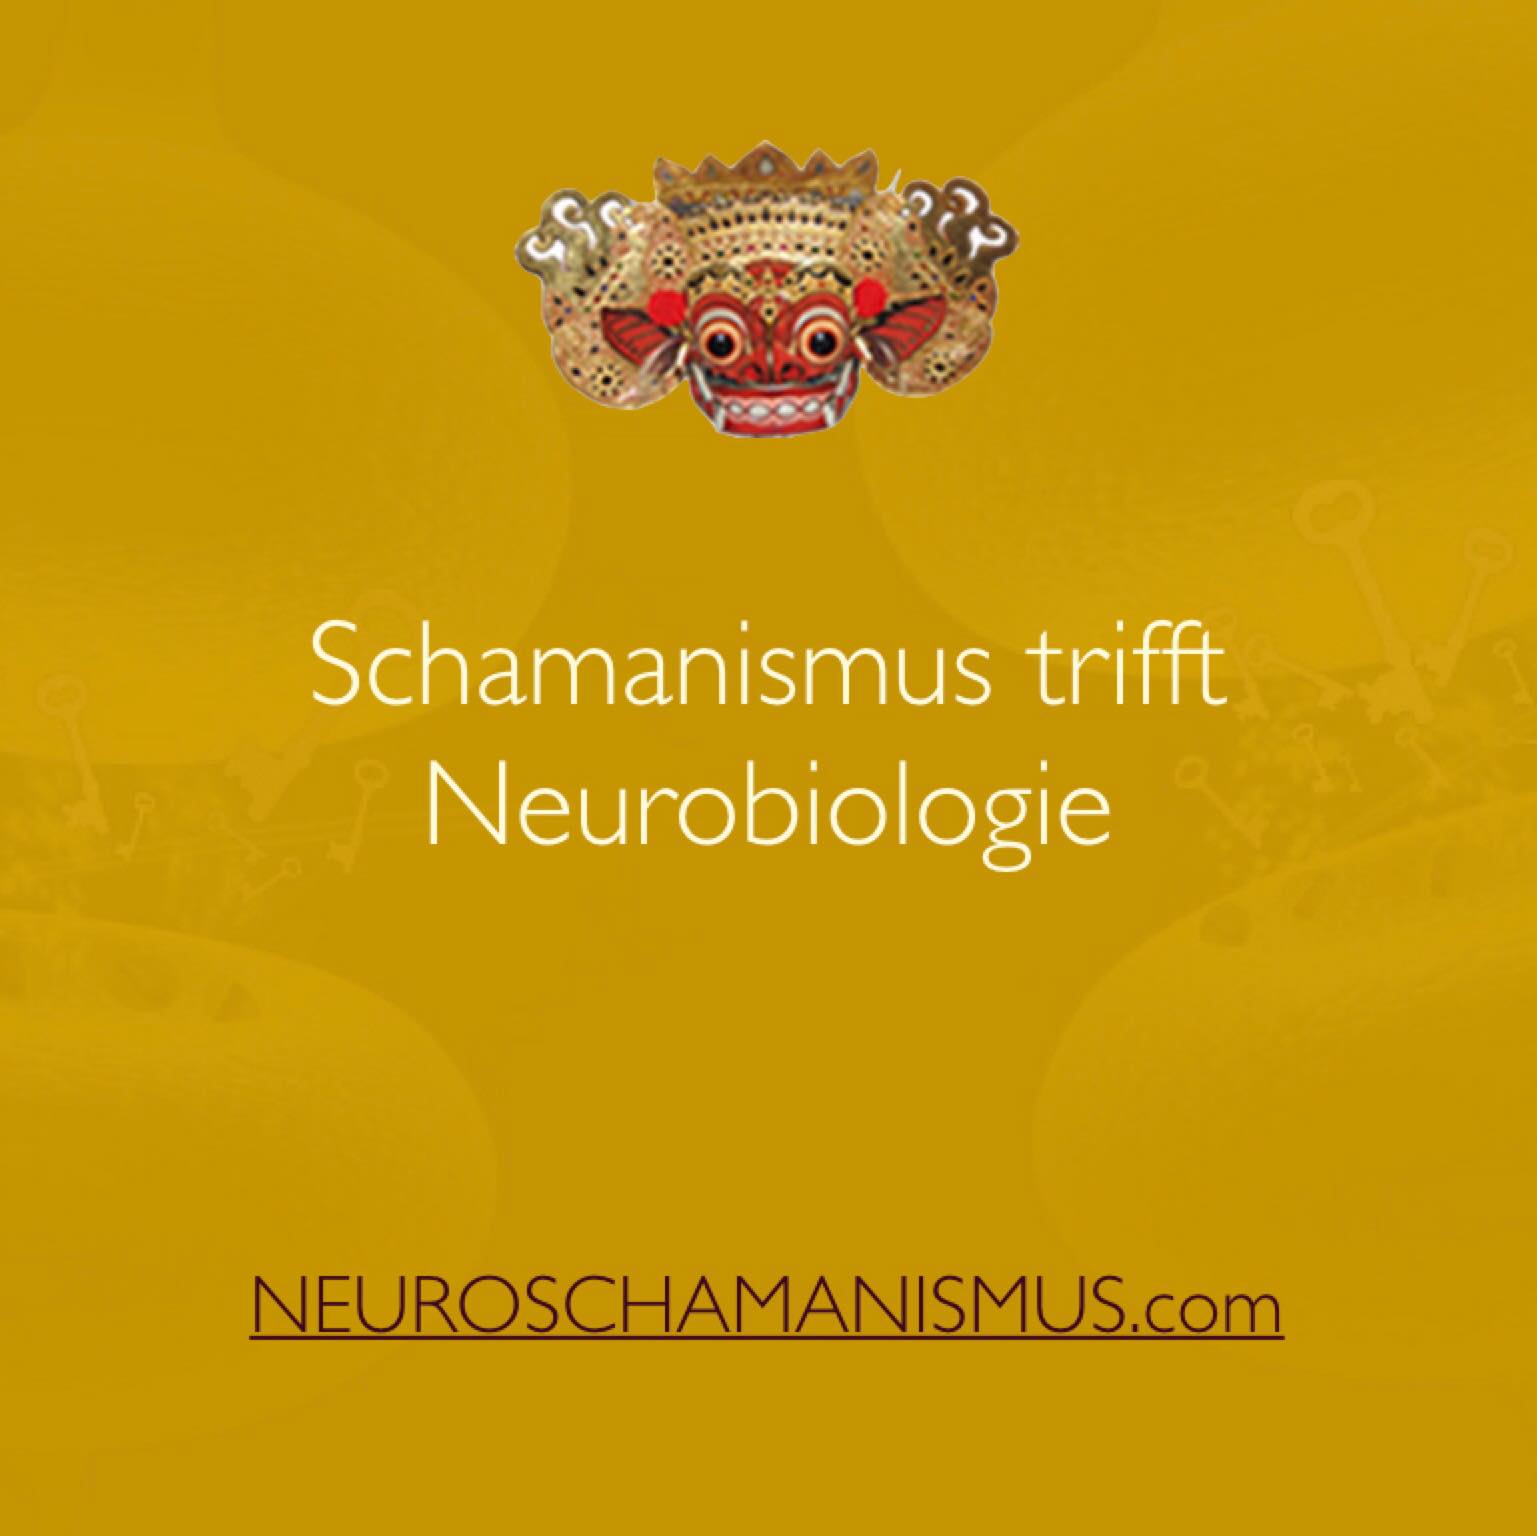 (c) Neuroschamanismus.com